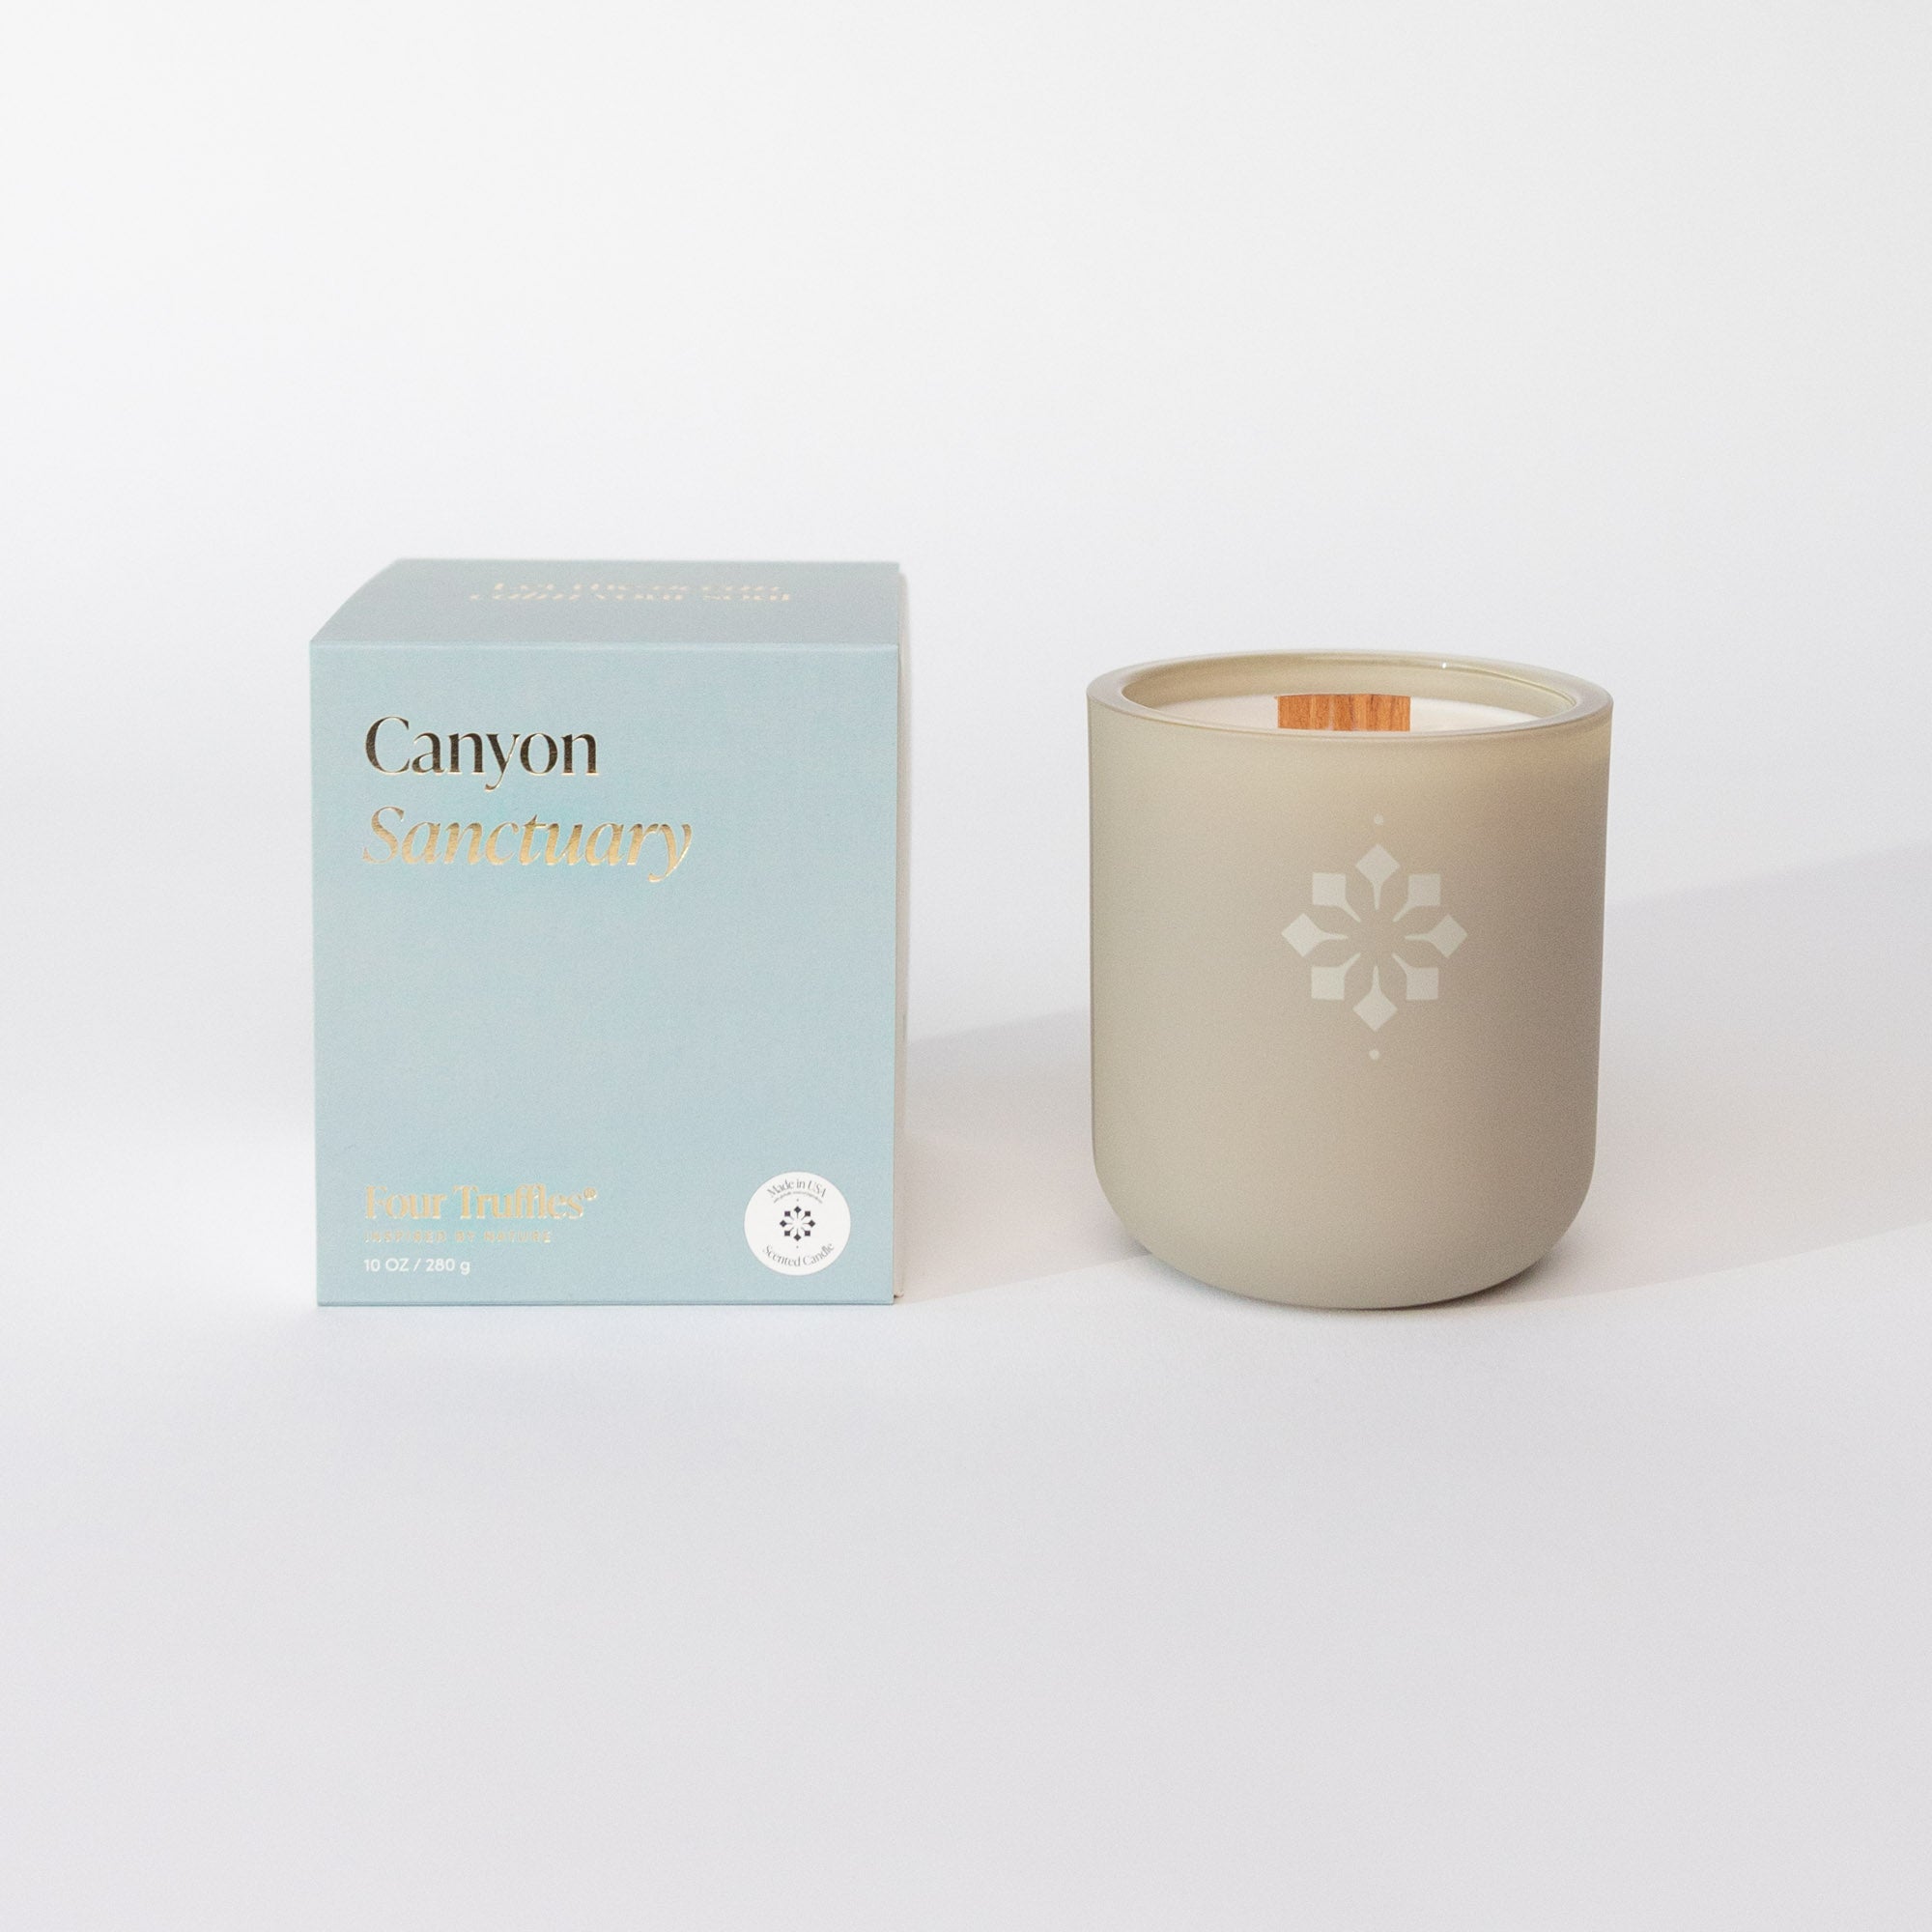 Canyon Sanctuary Luxury Candle - Four Truffles